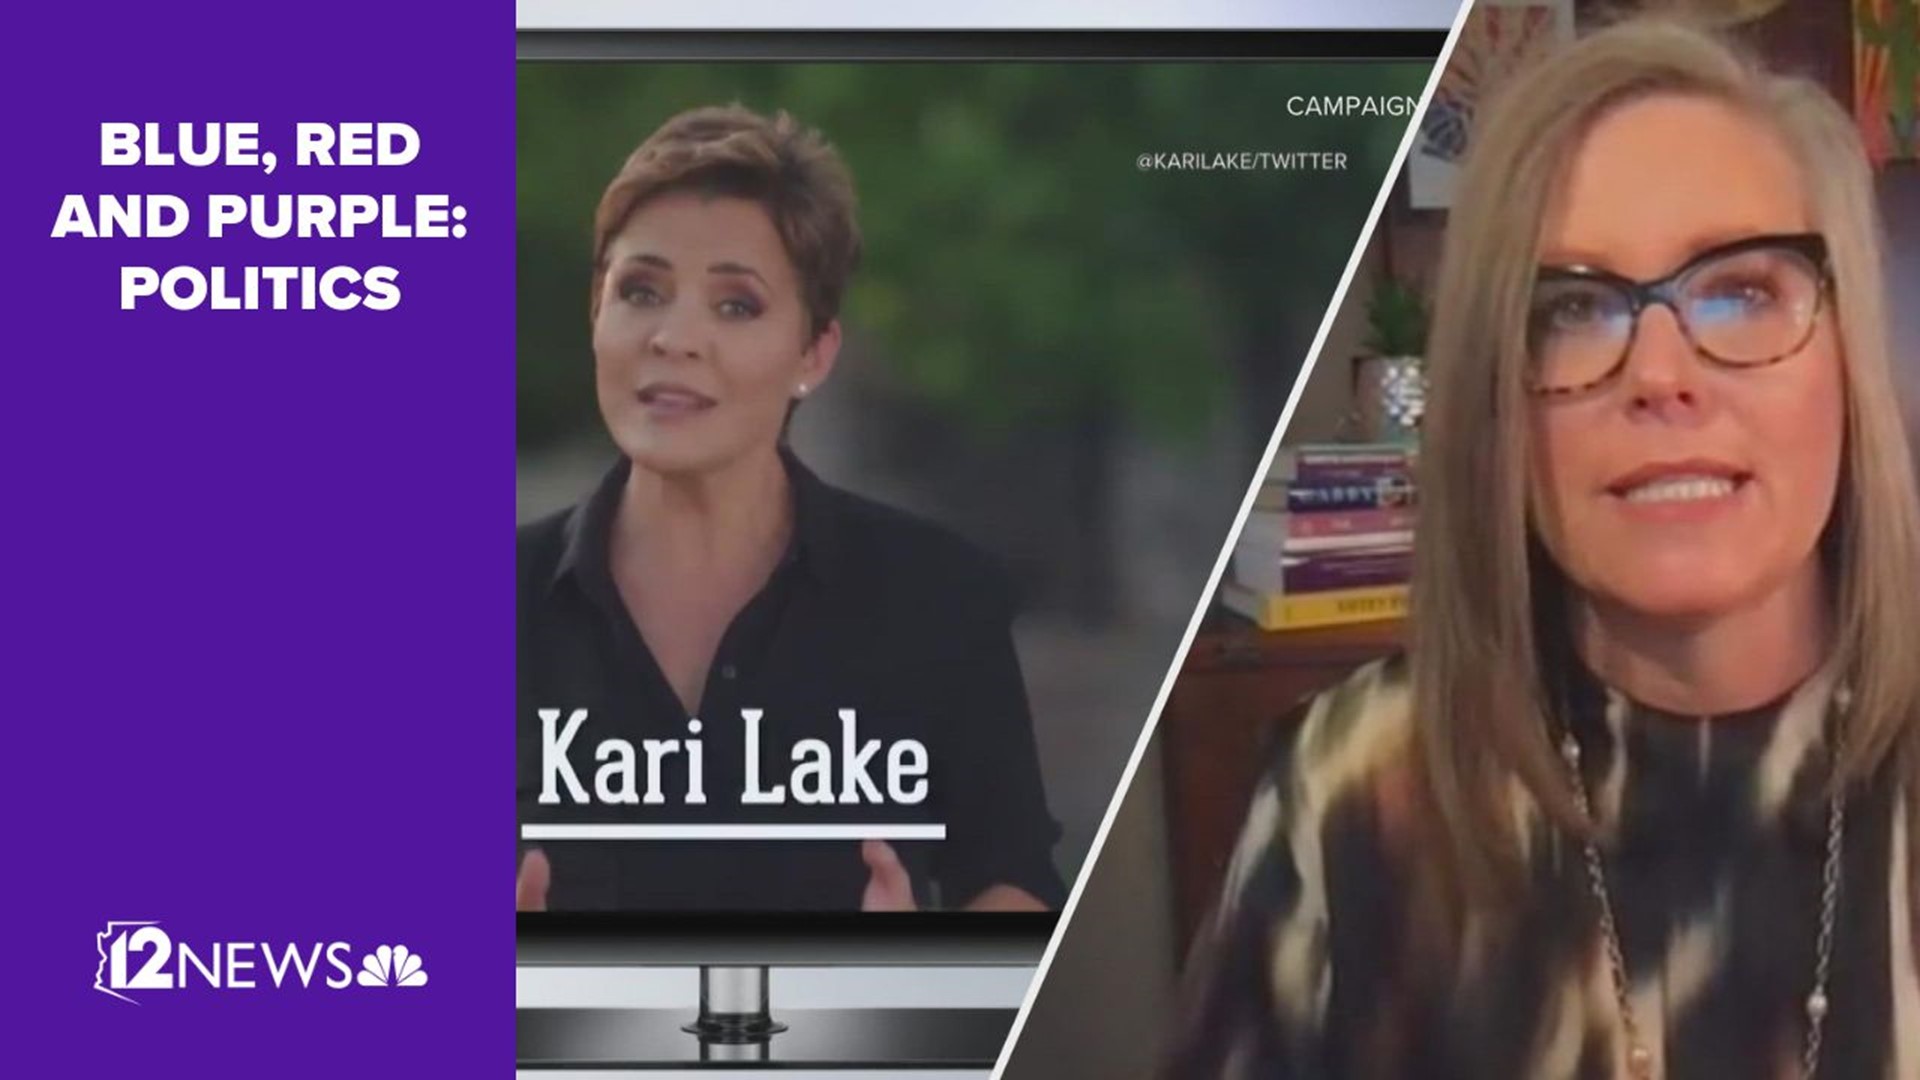 Republican Kari Lake has accused Democrat Katie Hobbs of voting as a legislator to block the Pledge of Allegiance and the teaching of founding documents in schools.